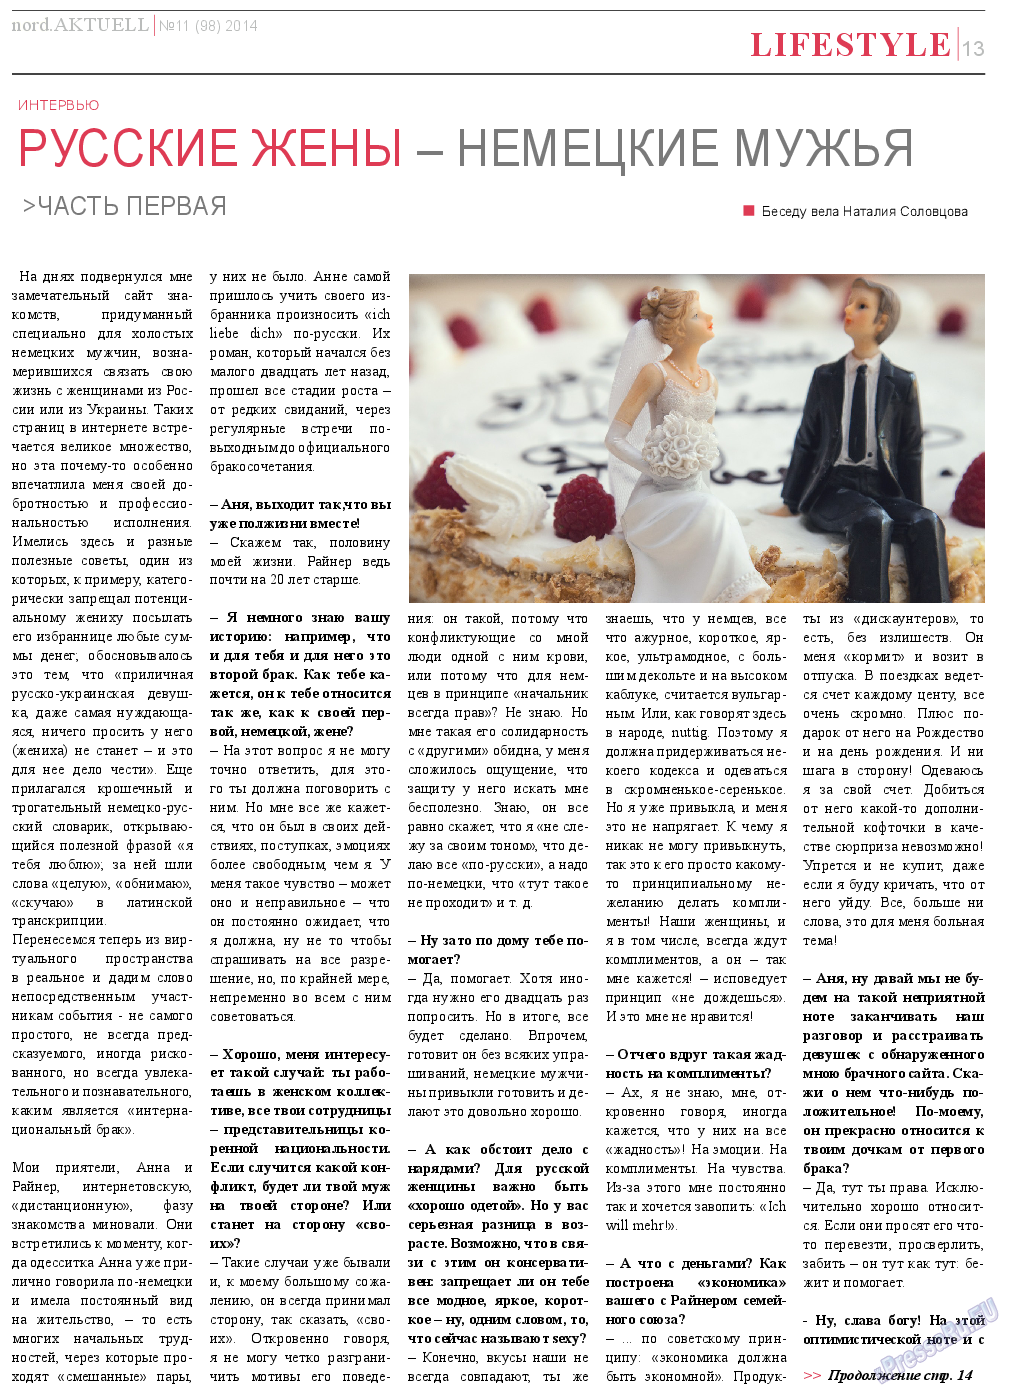 nord.Aktuell, газета. 2014 №11 стр.13